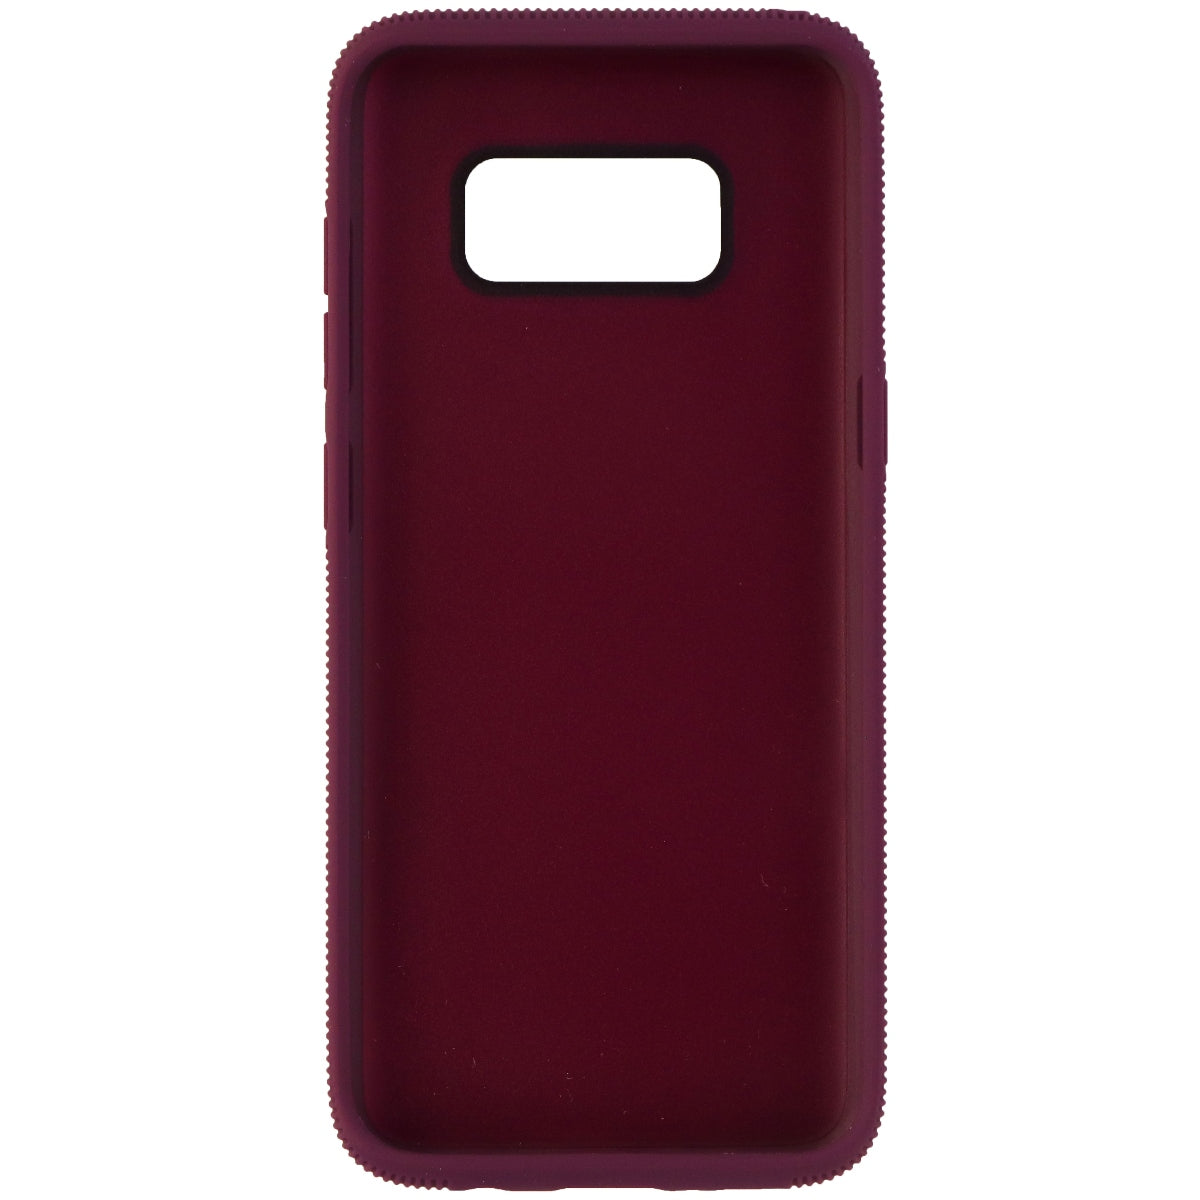 Original Incipio Octane Series Protective Case Cover Samsung Galaxy S8 - Plum Cell Phone - Cases, Covers & Skins Incipio    - Simple Cell Bulk Wholesale Pricing - USA Seller